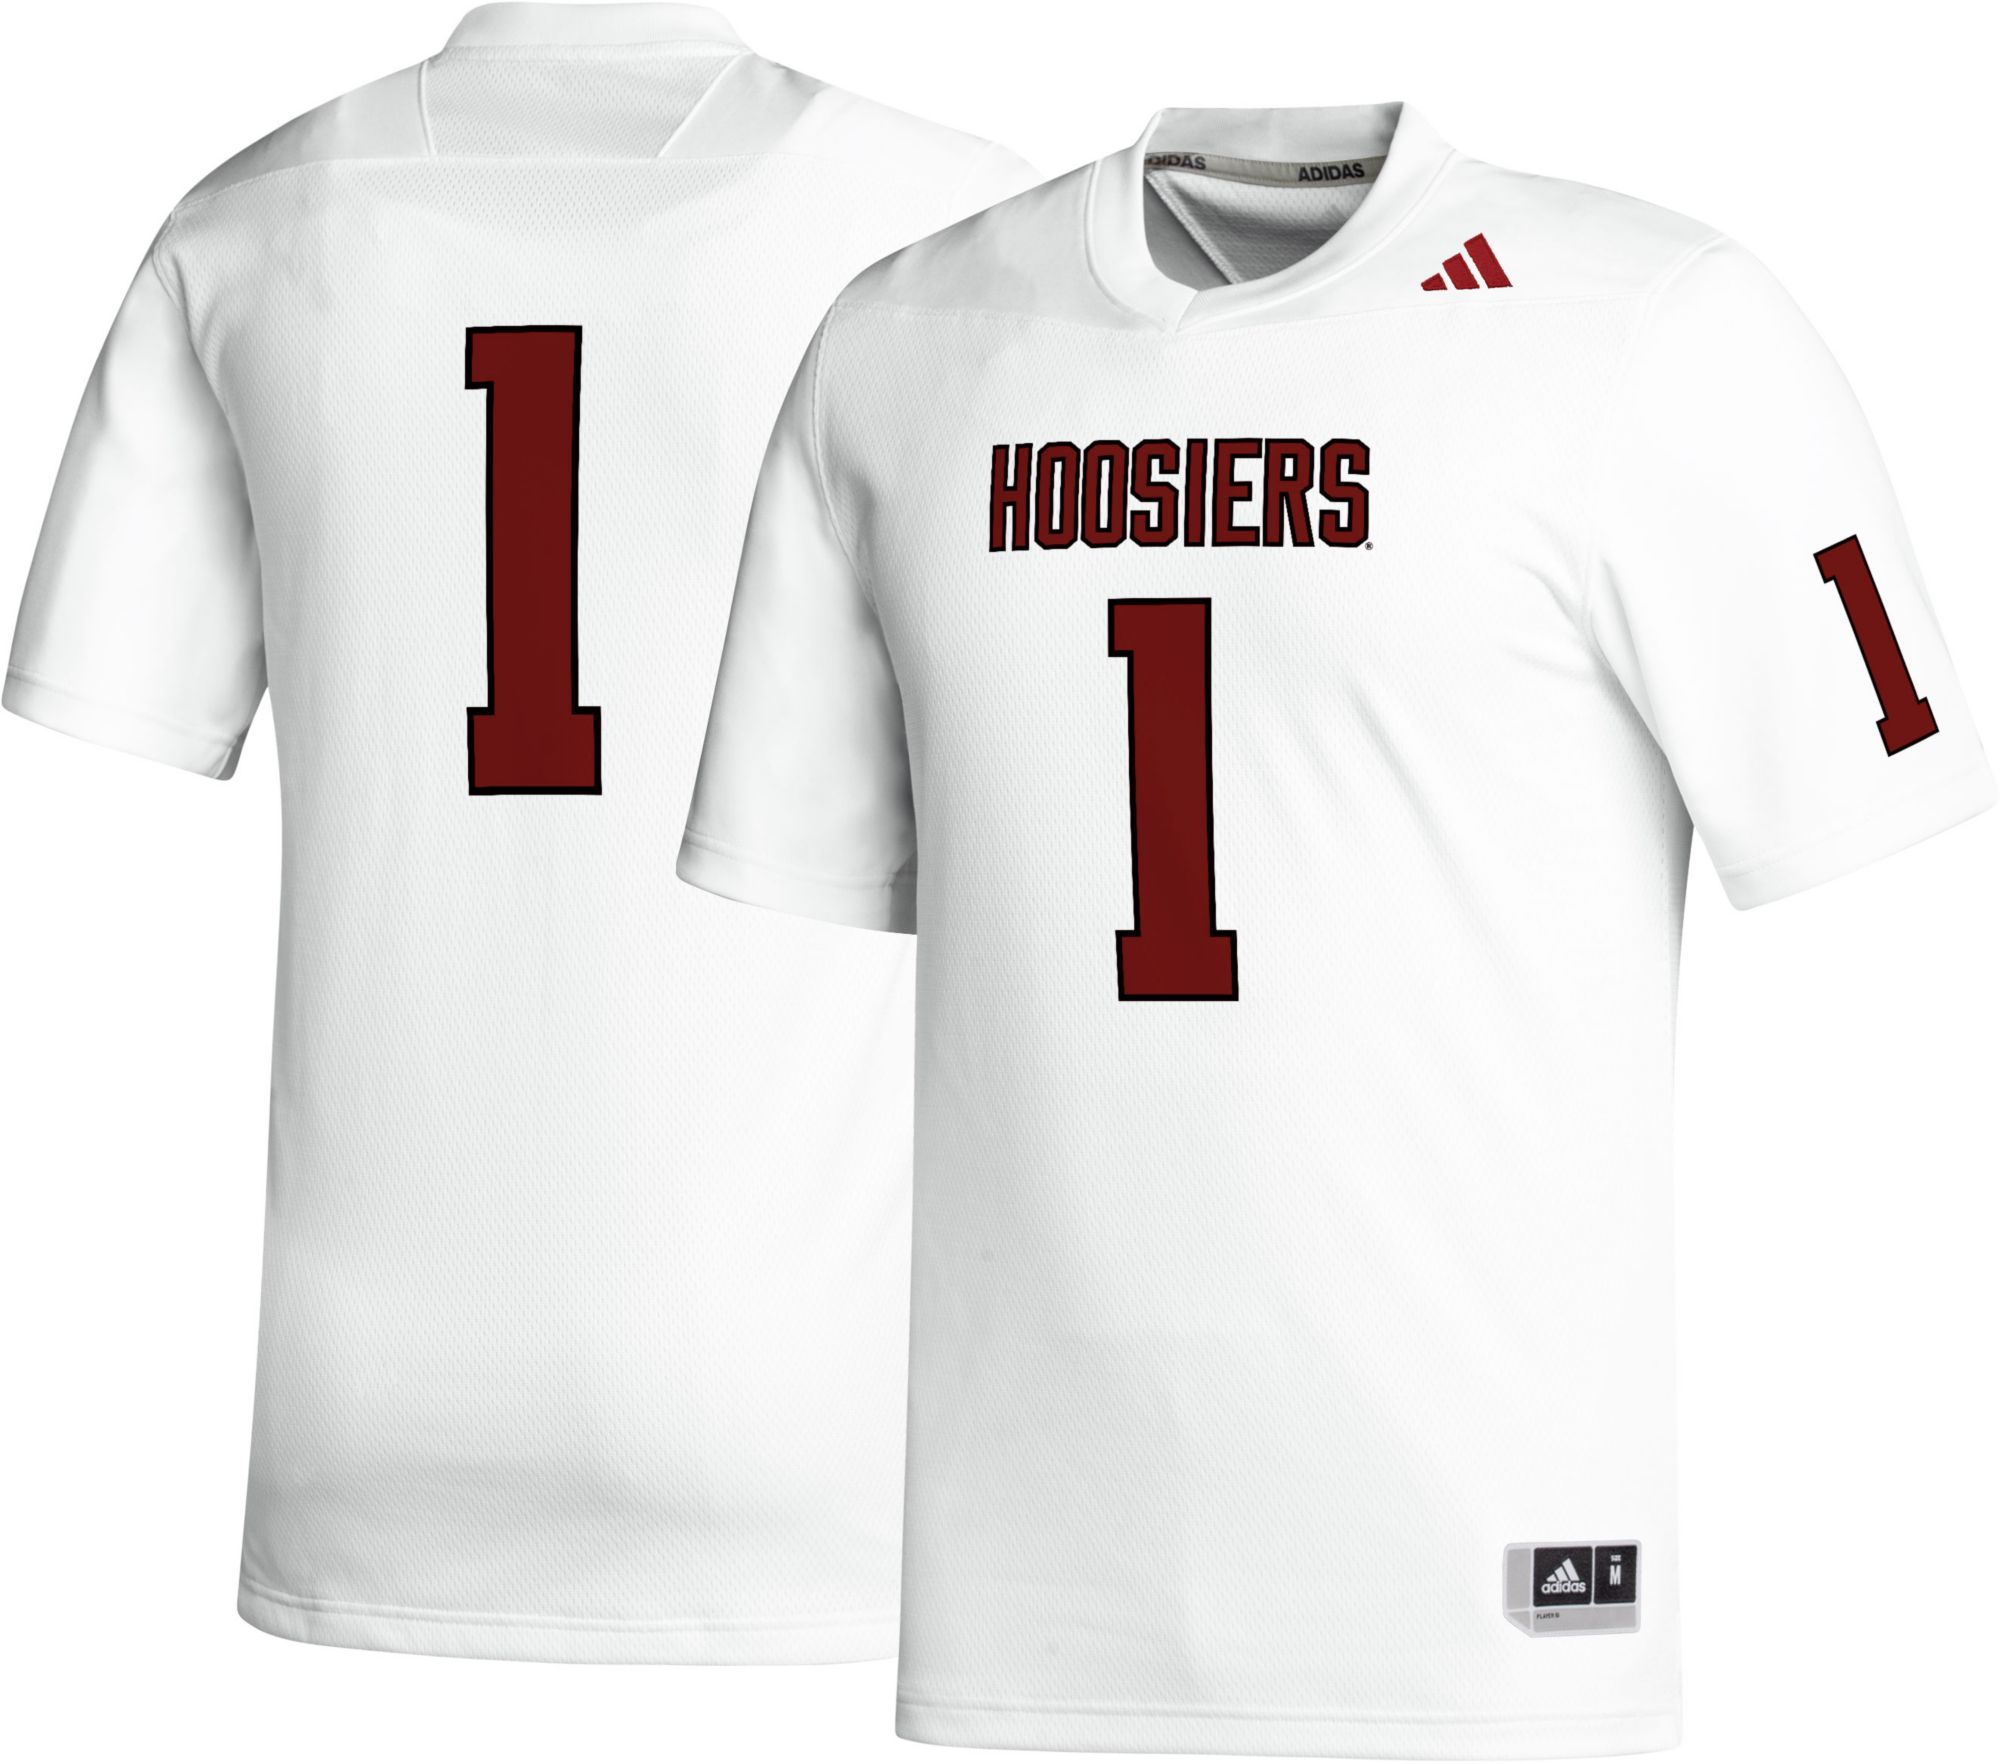 Hoosiers special teams jersey